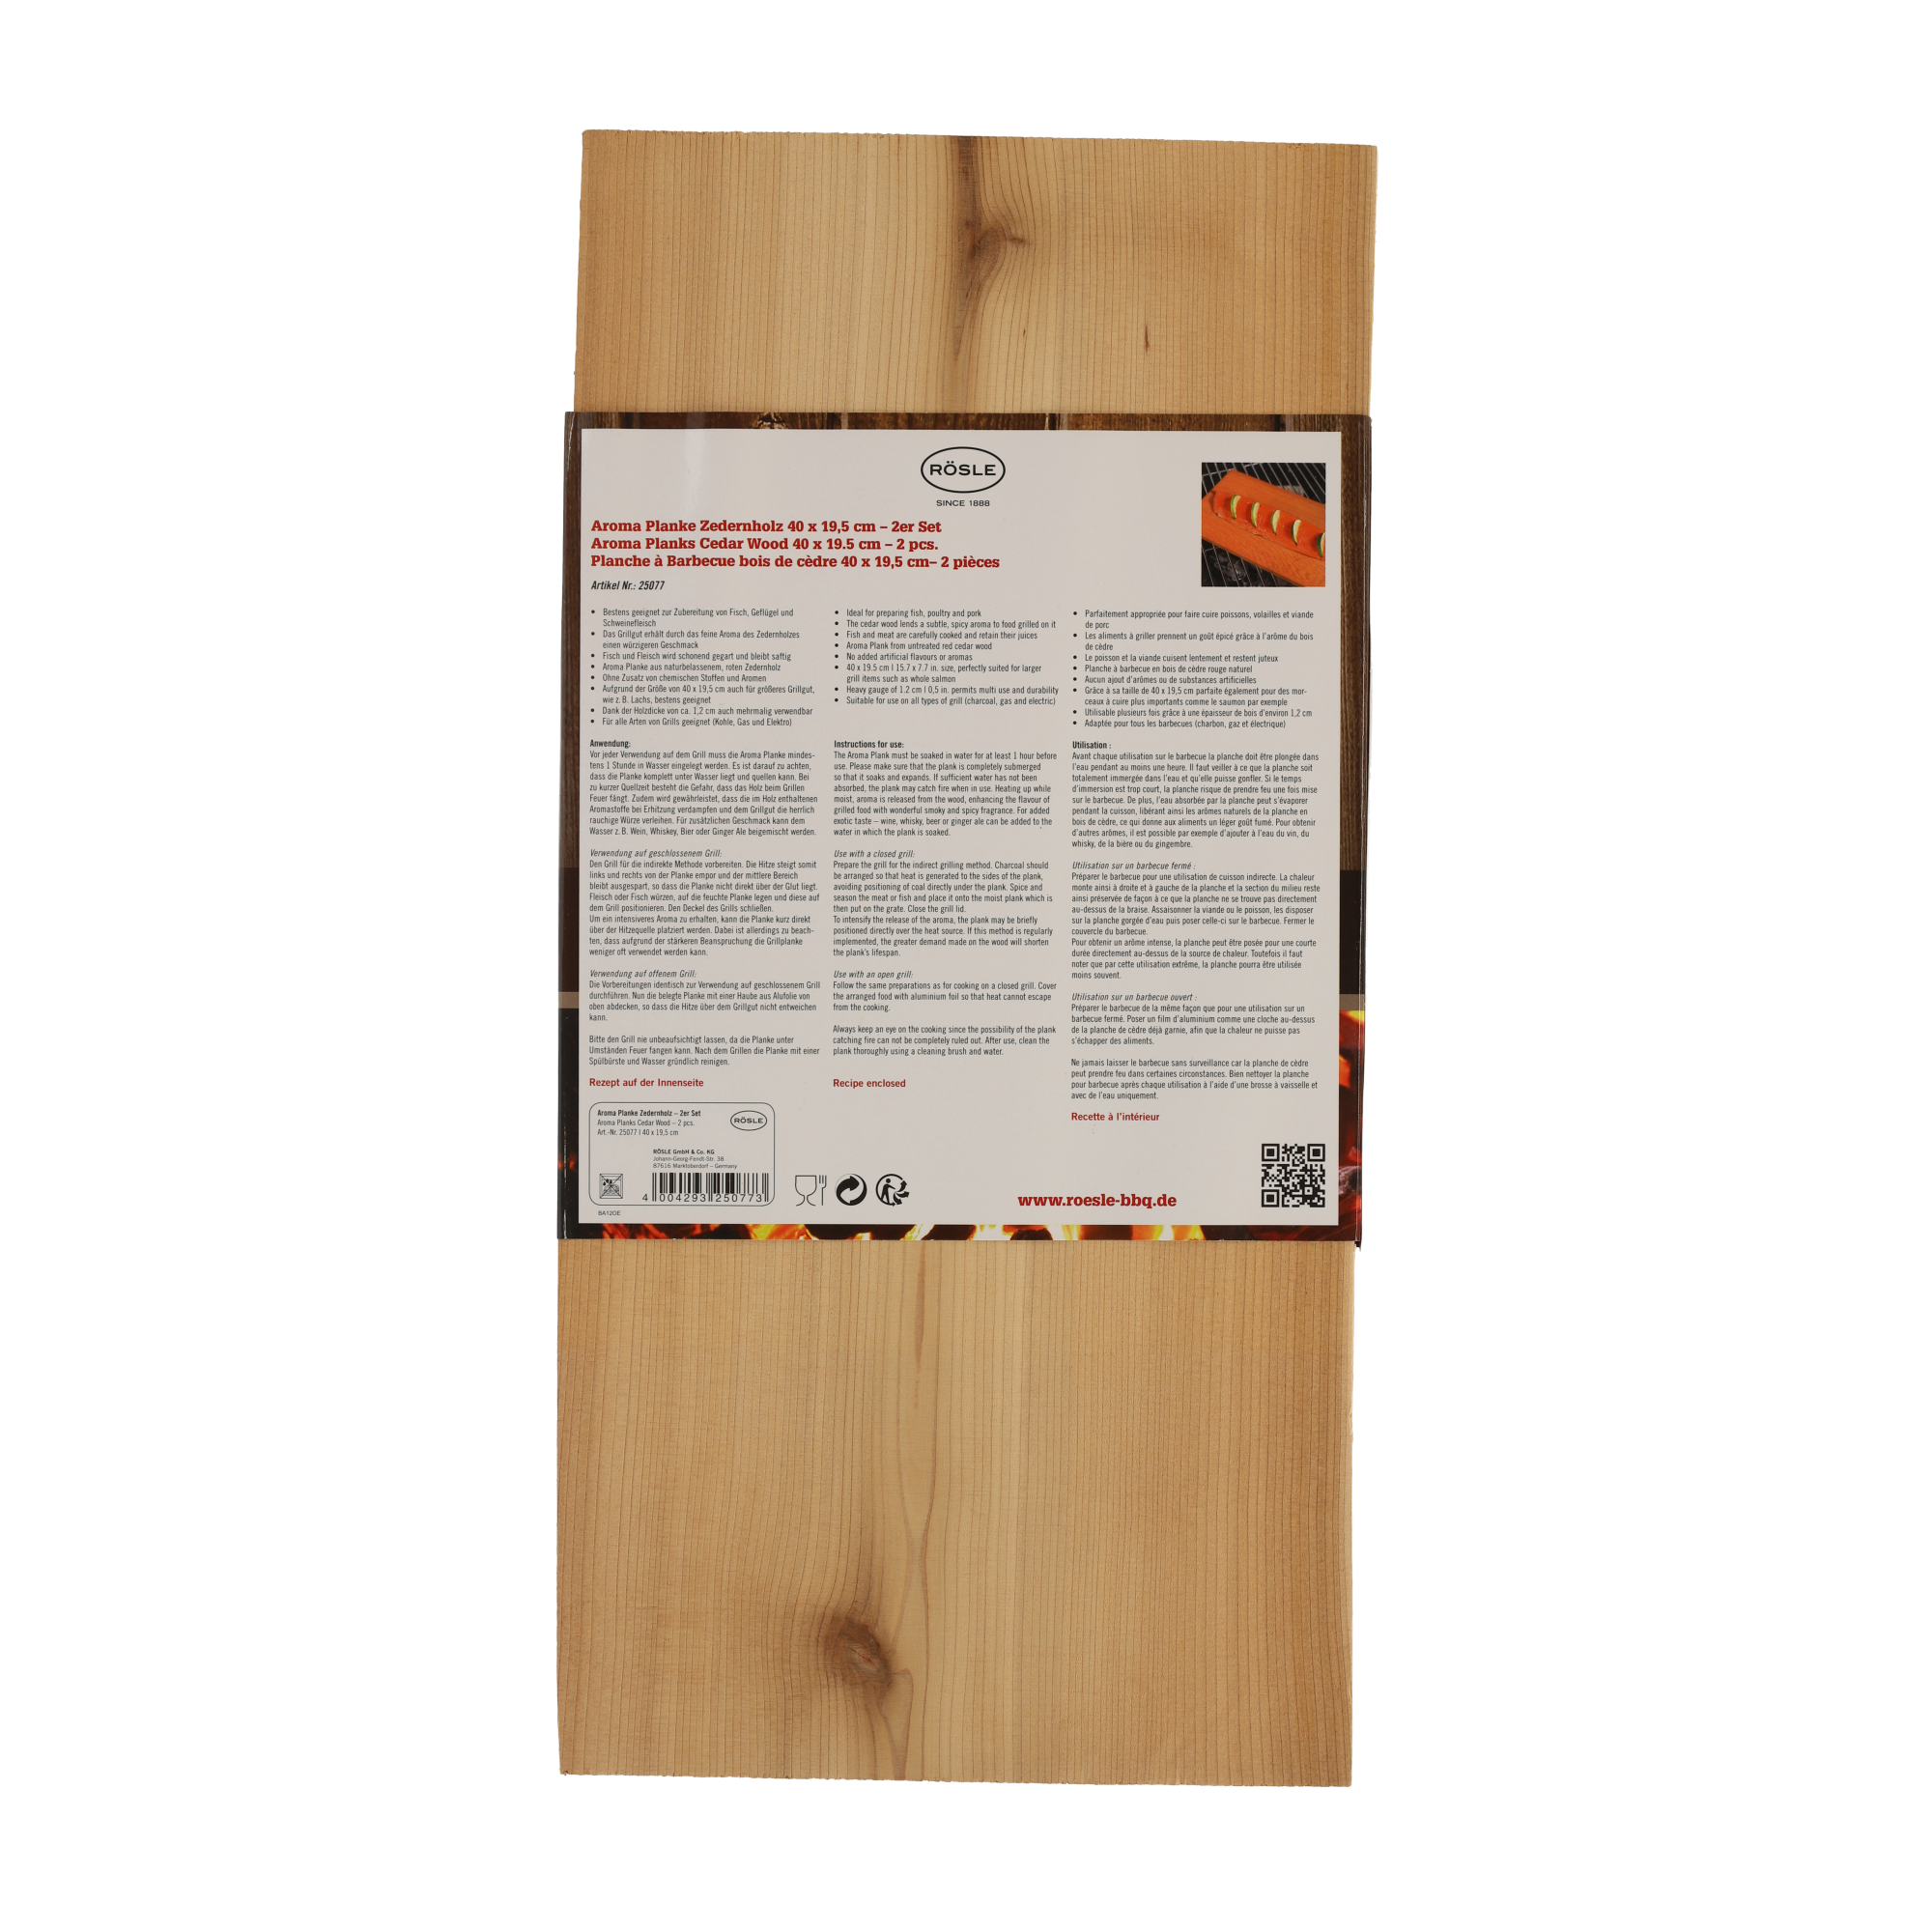 Aromaplanke Zedernholz 40 x 19,5 cm 2 Stück + product picture